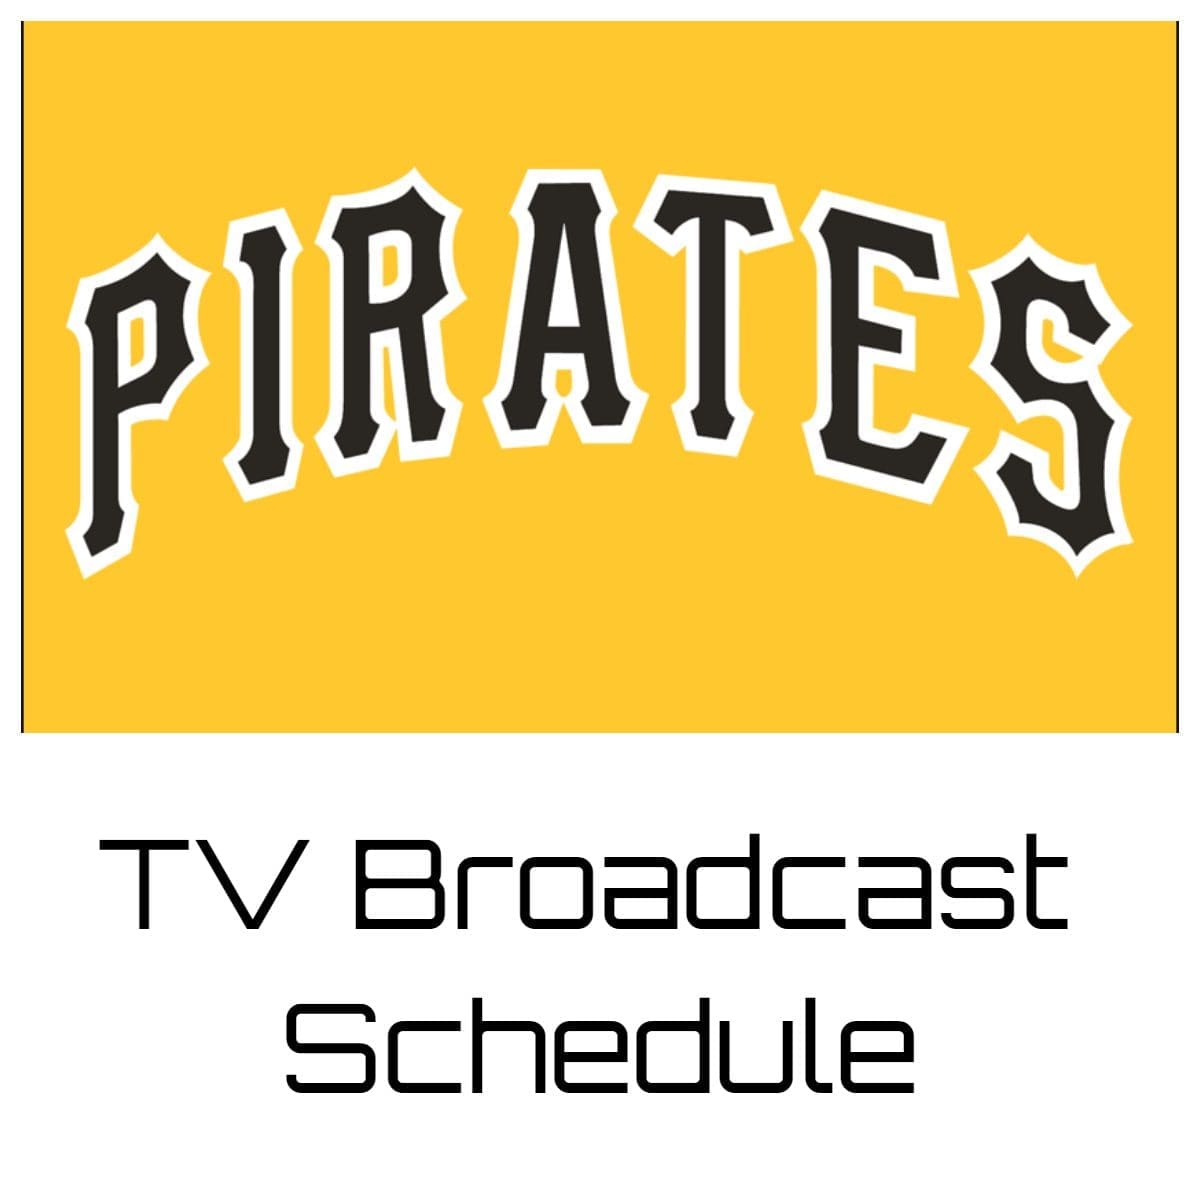 Pittsburgh Pirates TV Broadcast Schedule